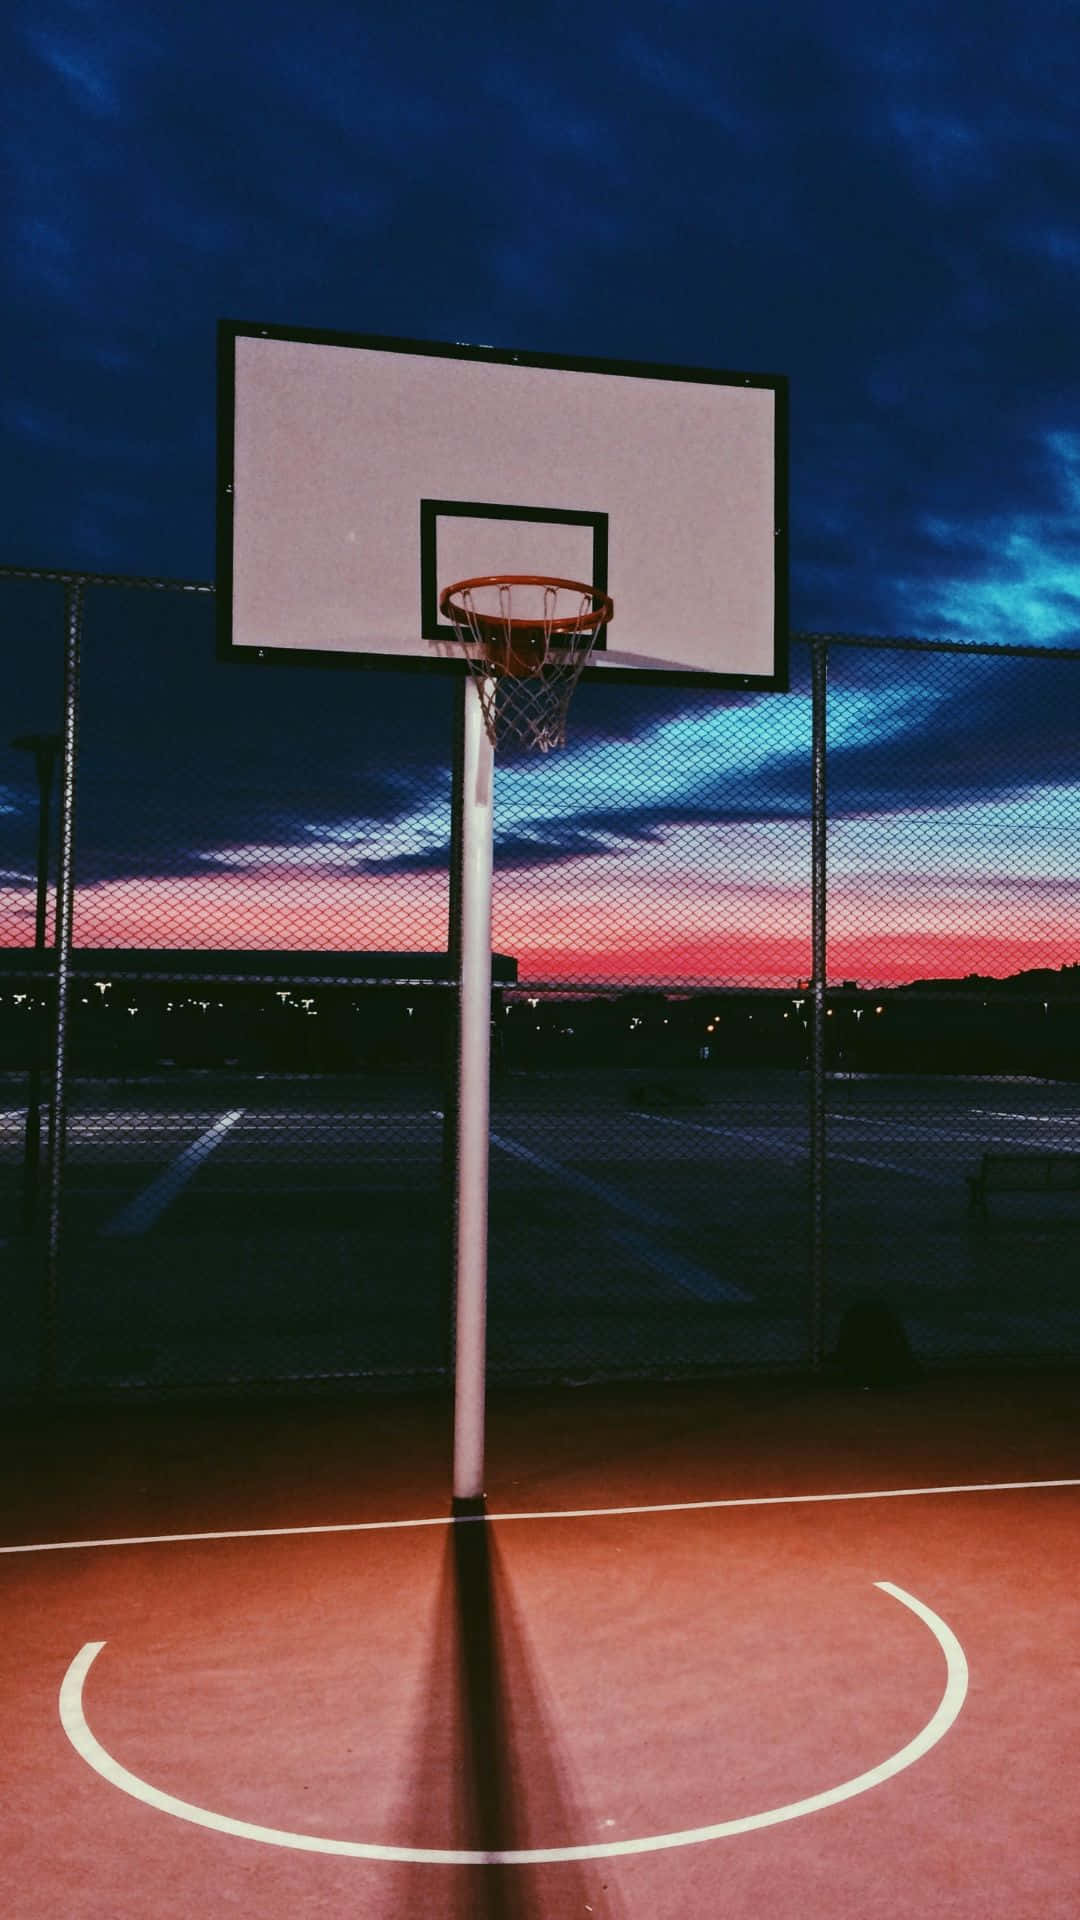 Twilight Basketball Court Sunset Wallpaper